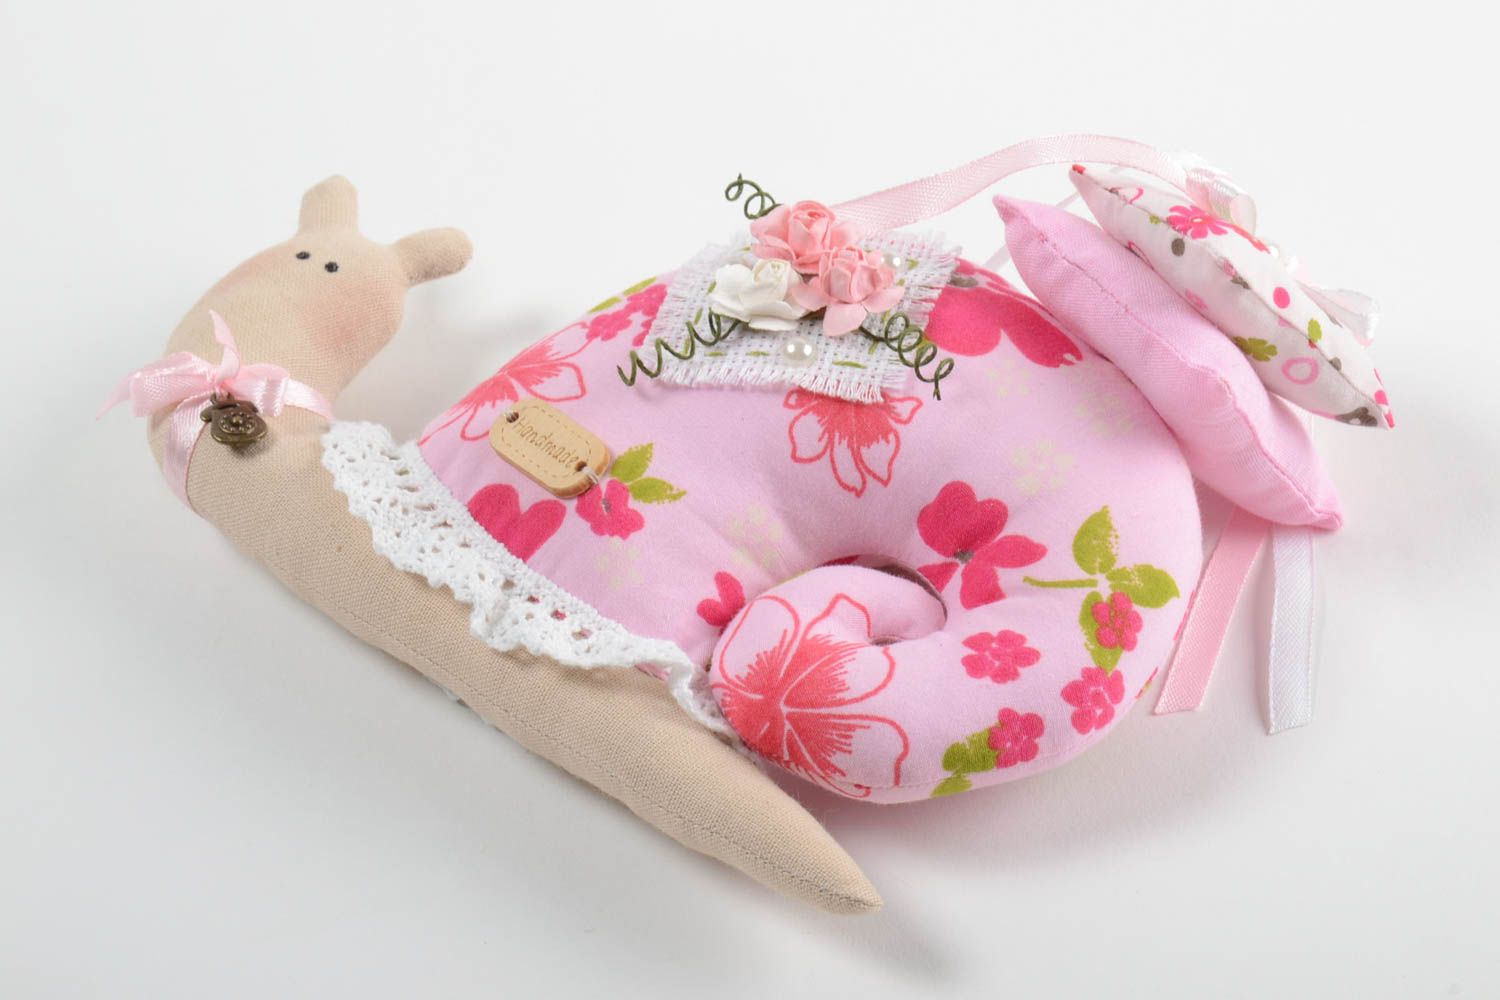 Beautiful homemade fabric toy decorative soft toys interior decorating photo 2